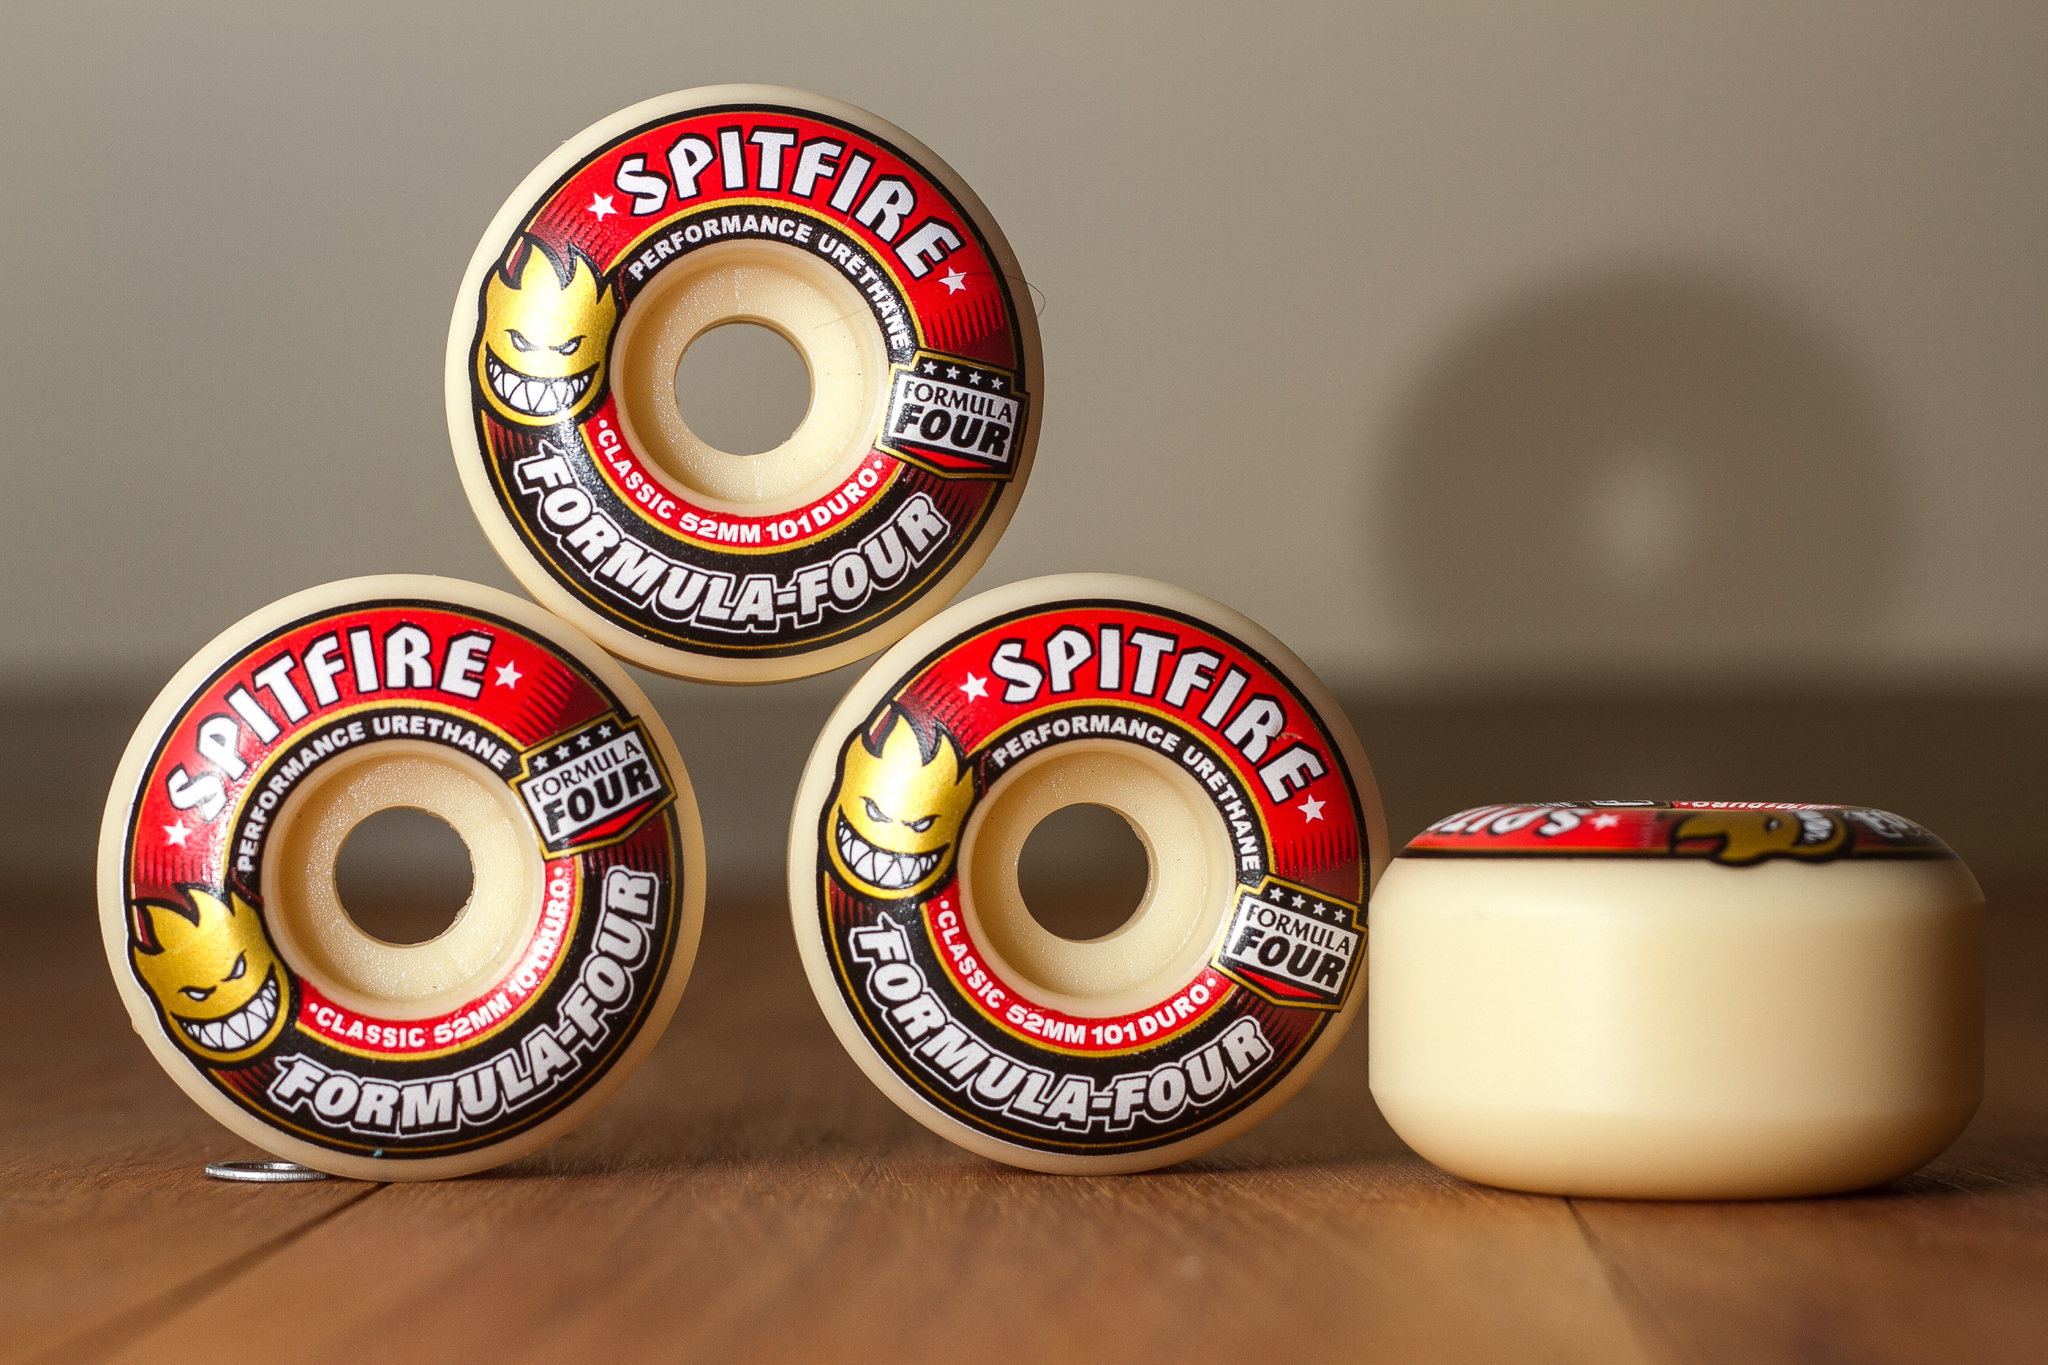 Review: Spitfire Formula Four Skateboard Wheels | BOARDWORLD